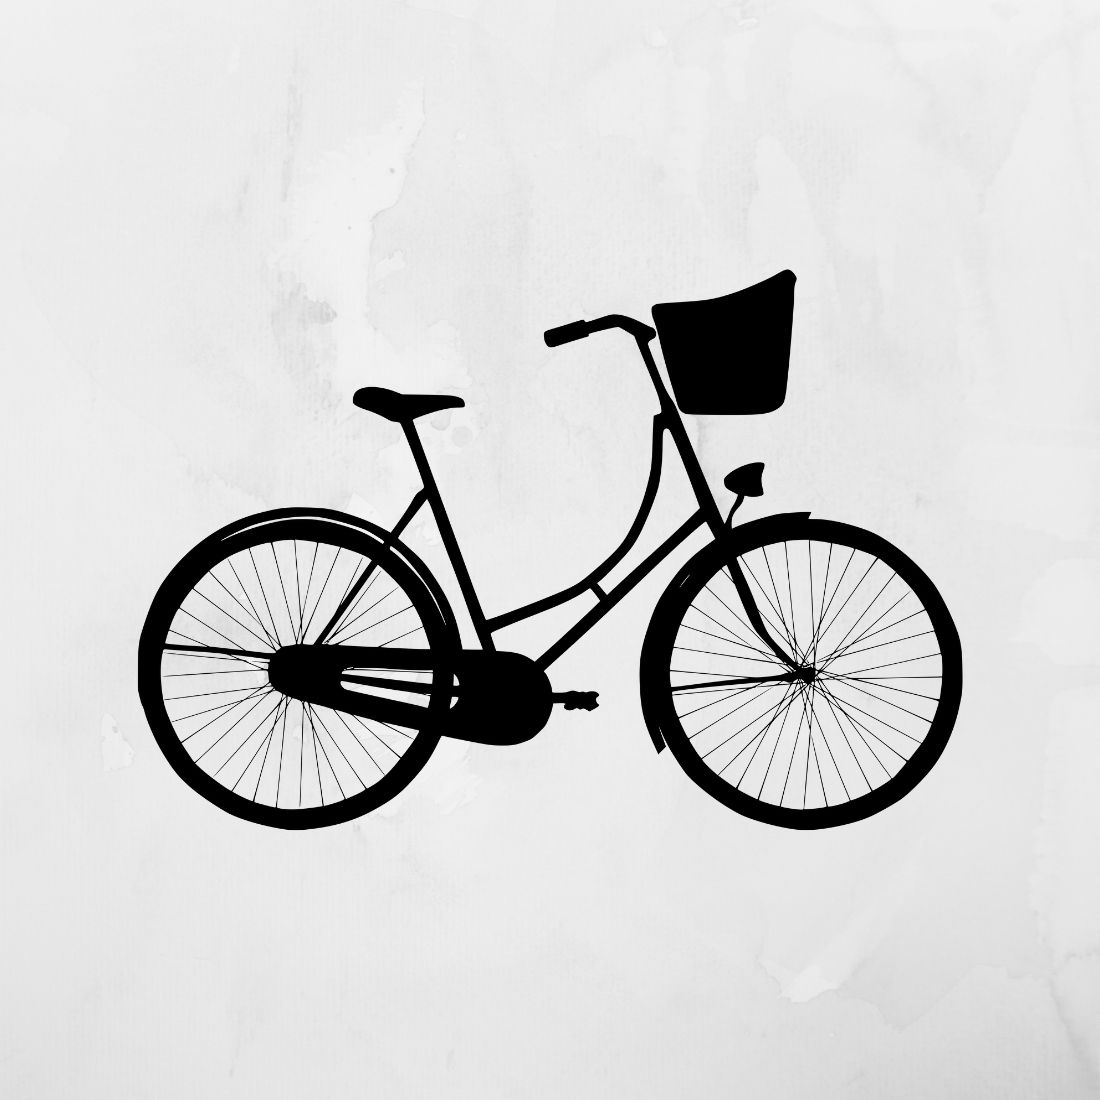 Bicycle SVG variant2.